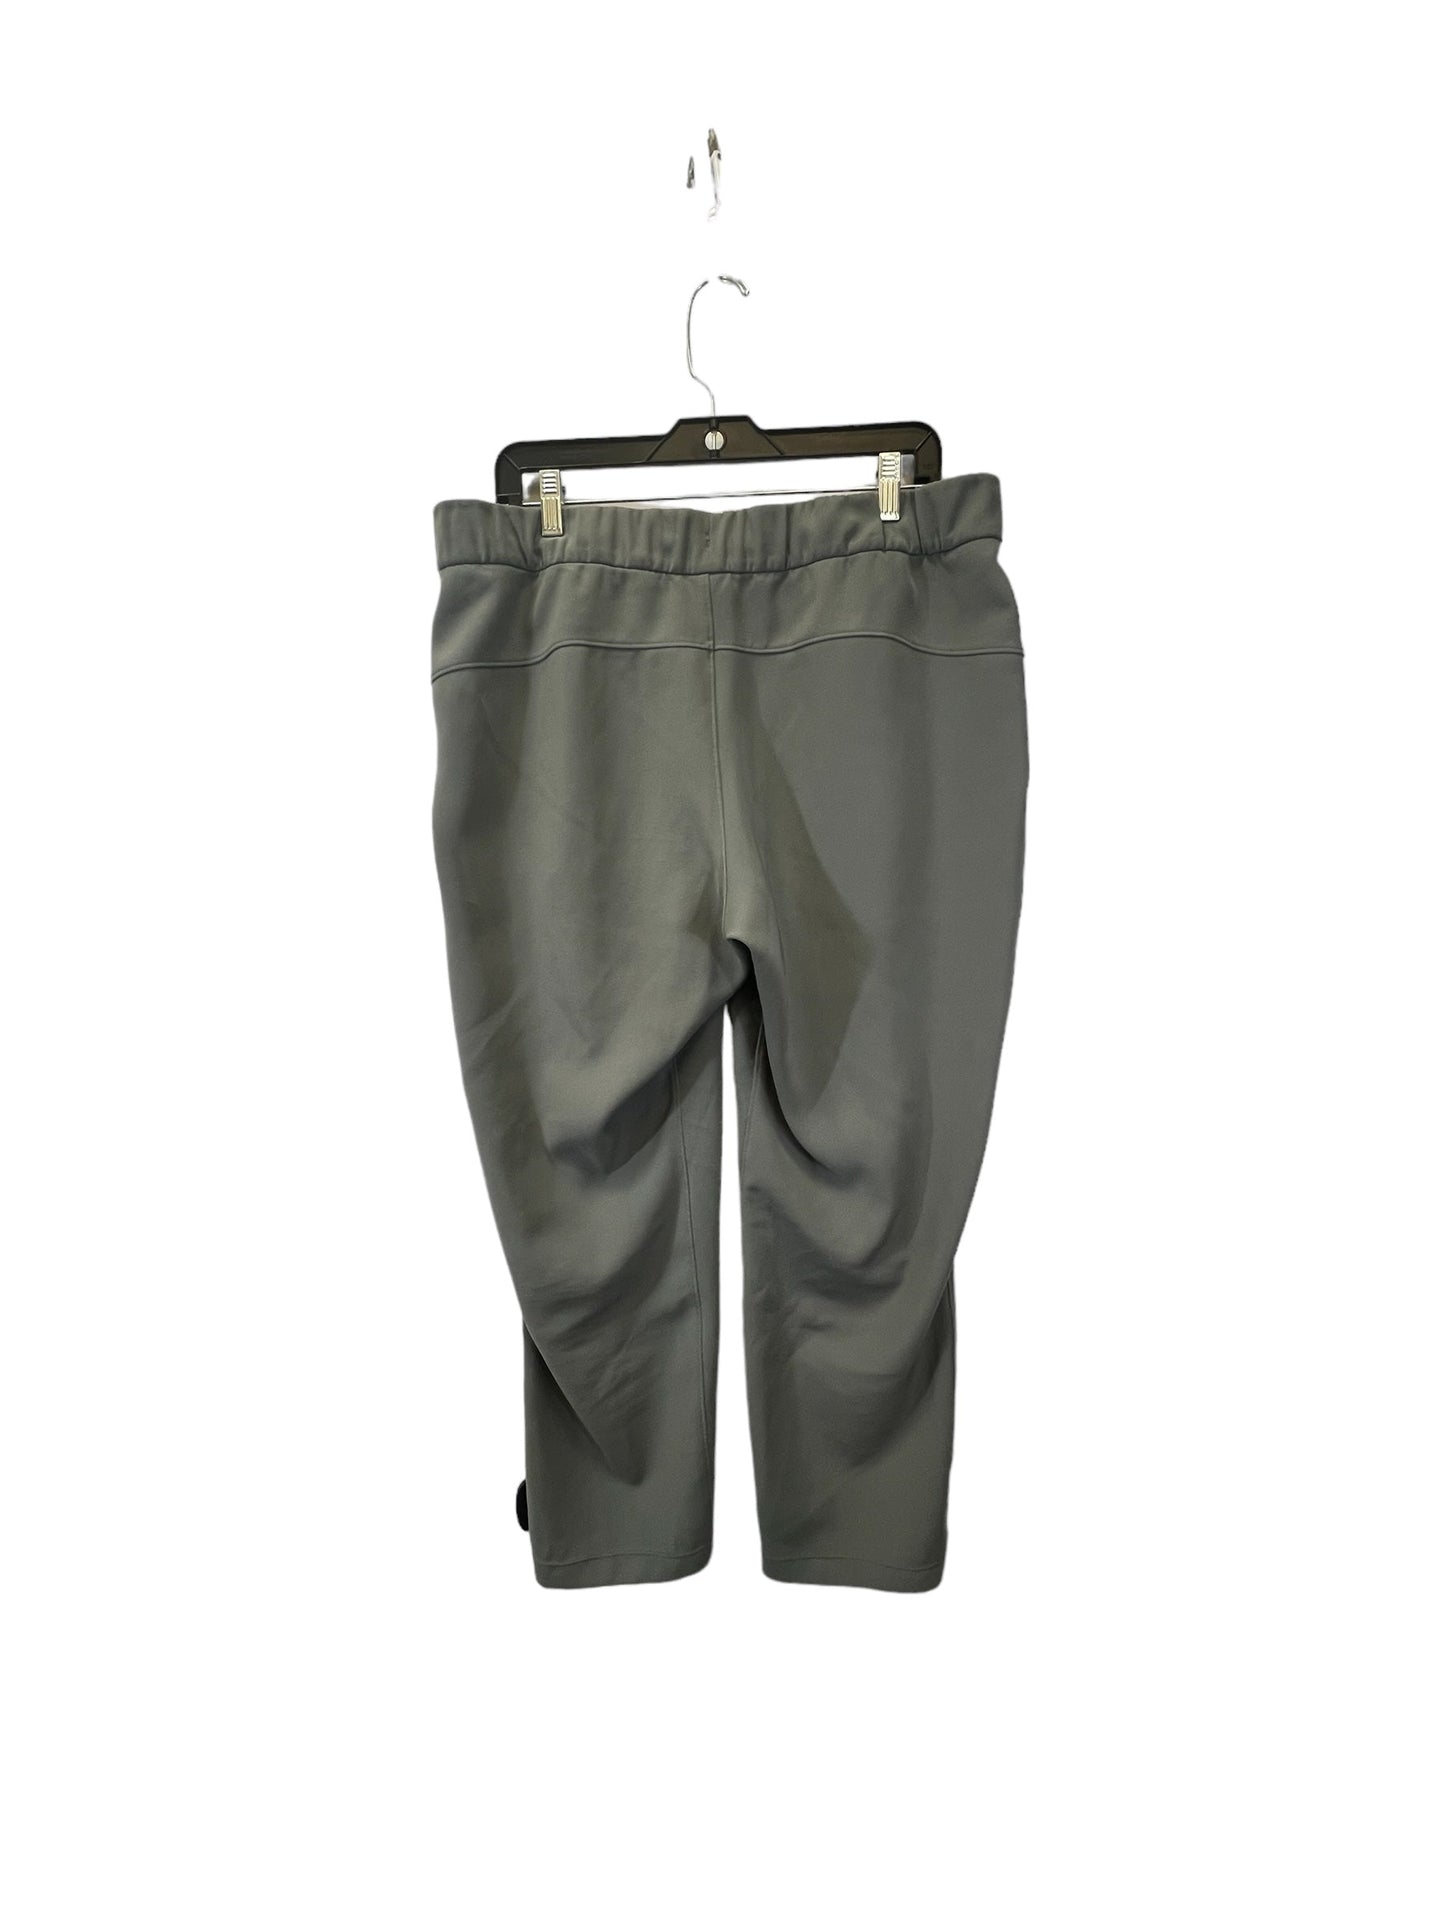 Green Athletic Pants Lululemon, Size 12